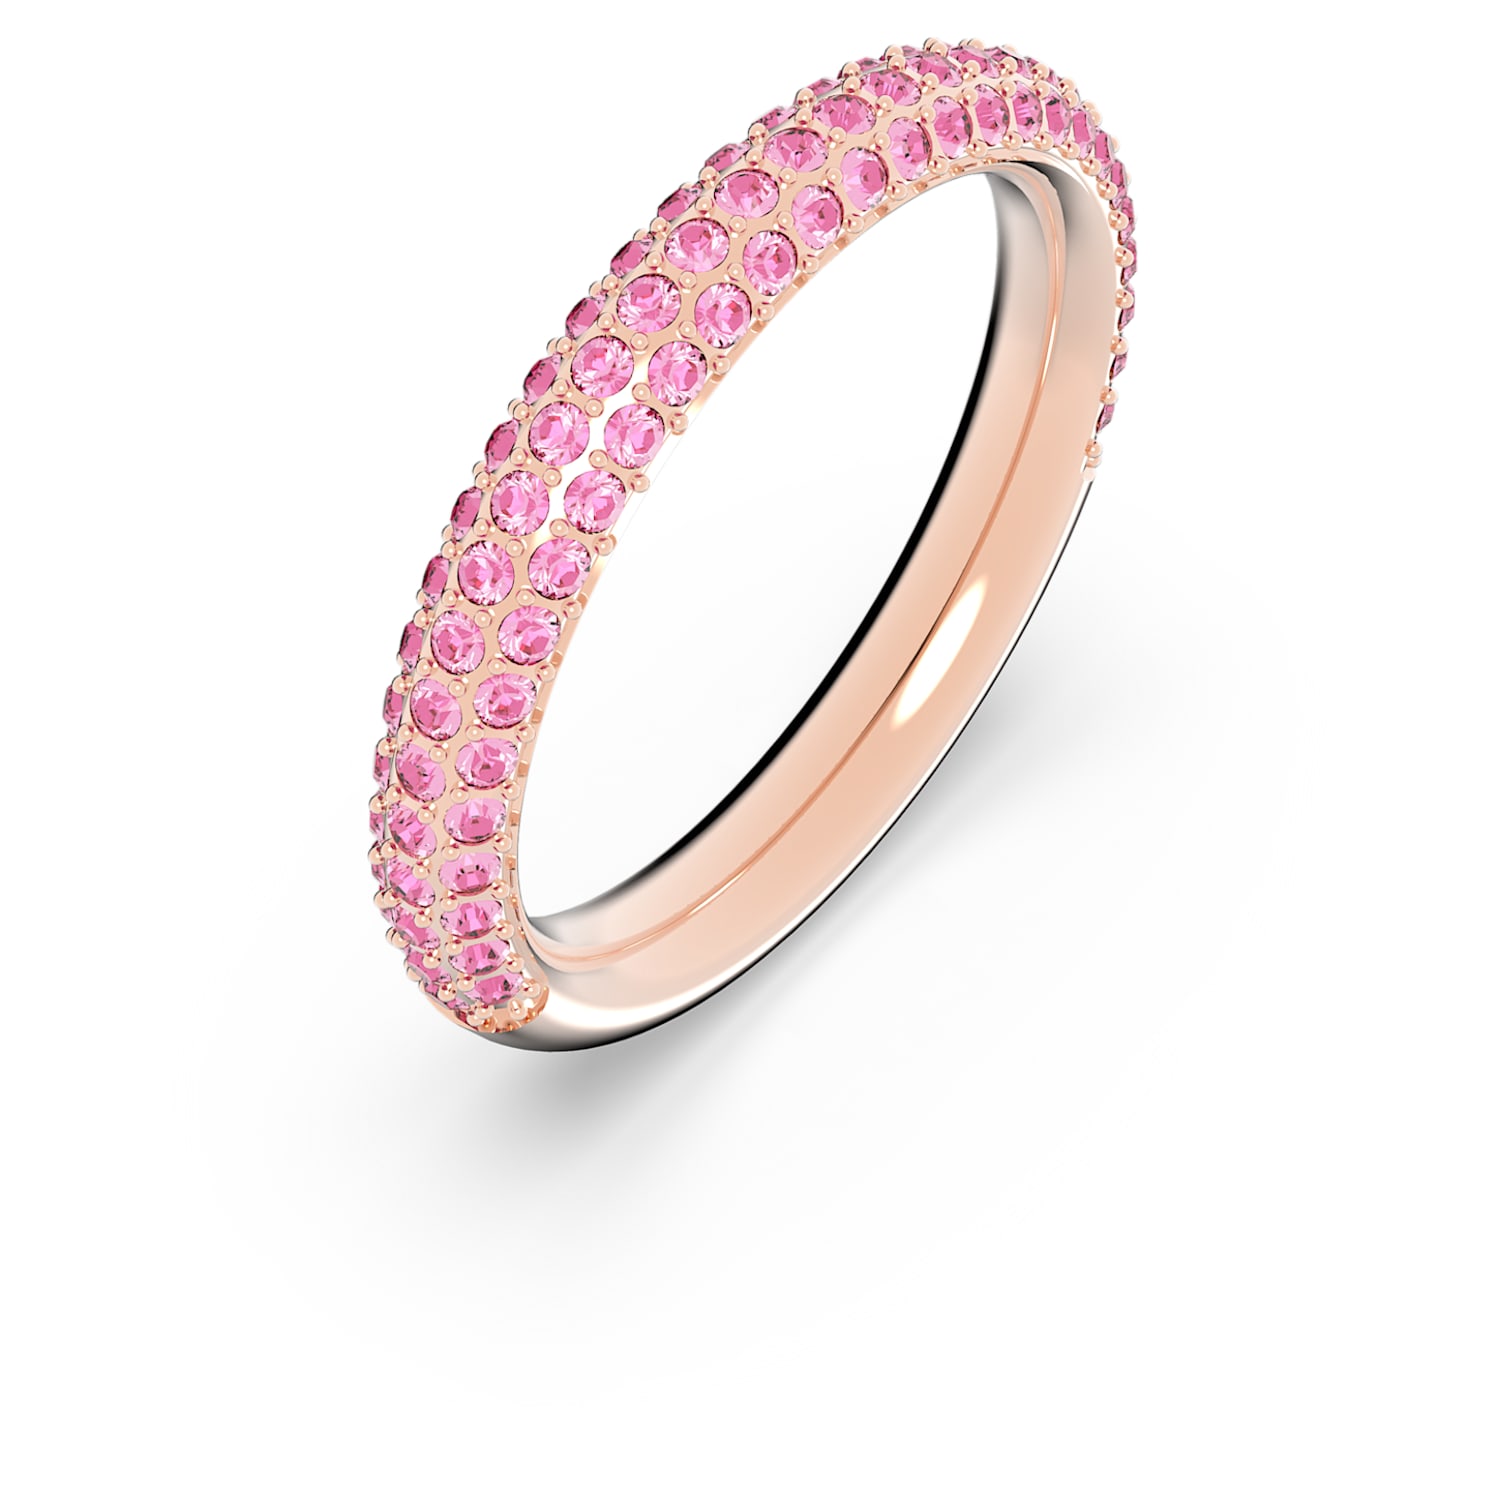 Stone ring, Pink, Rose gold-tone |